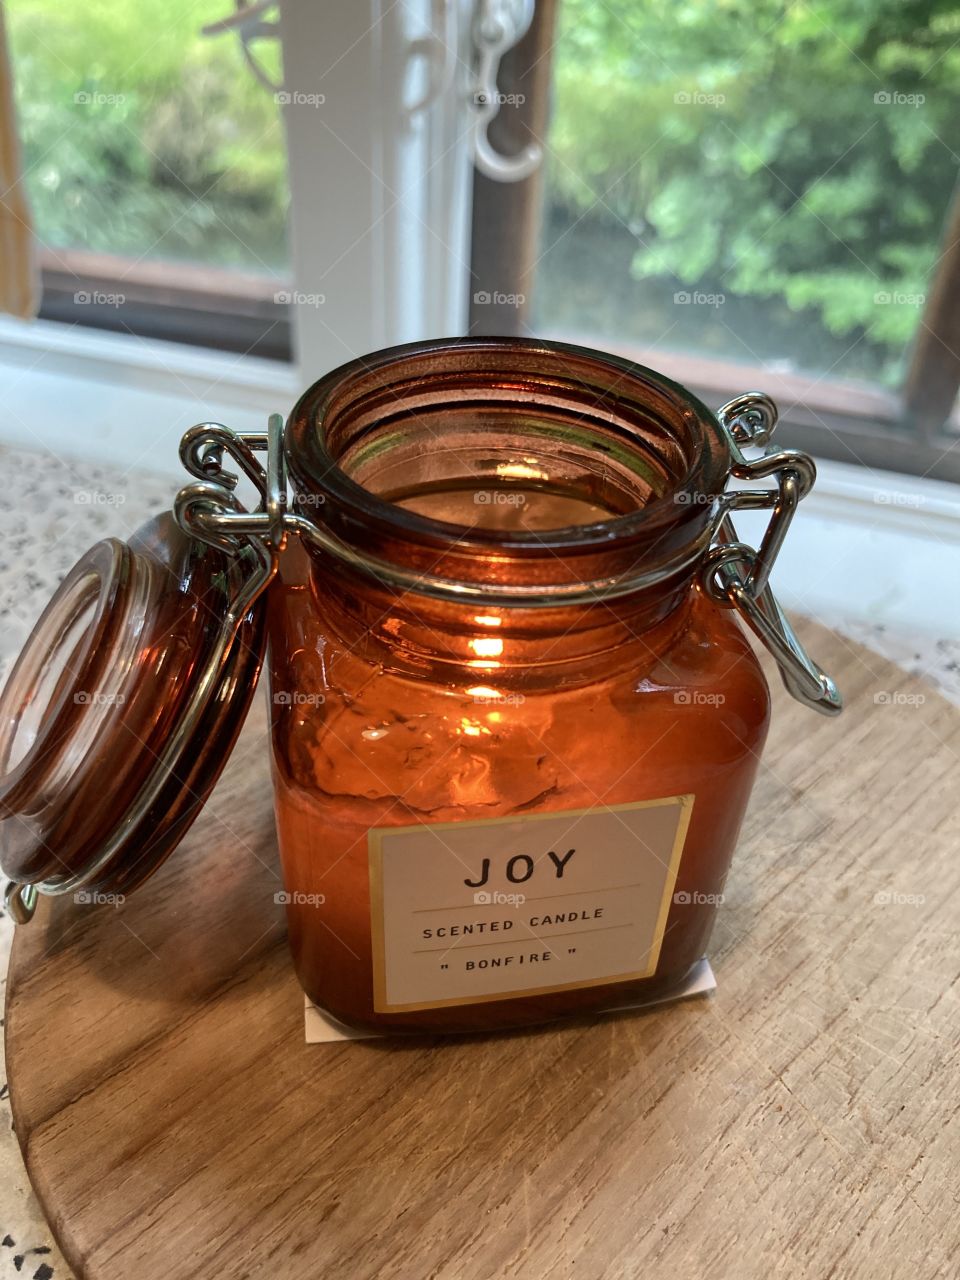 Joy in a jar